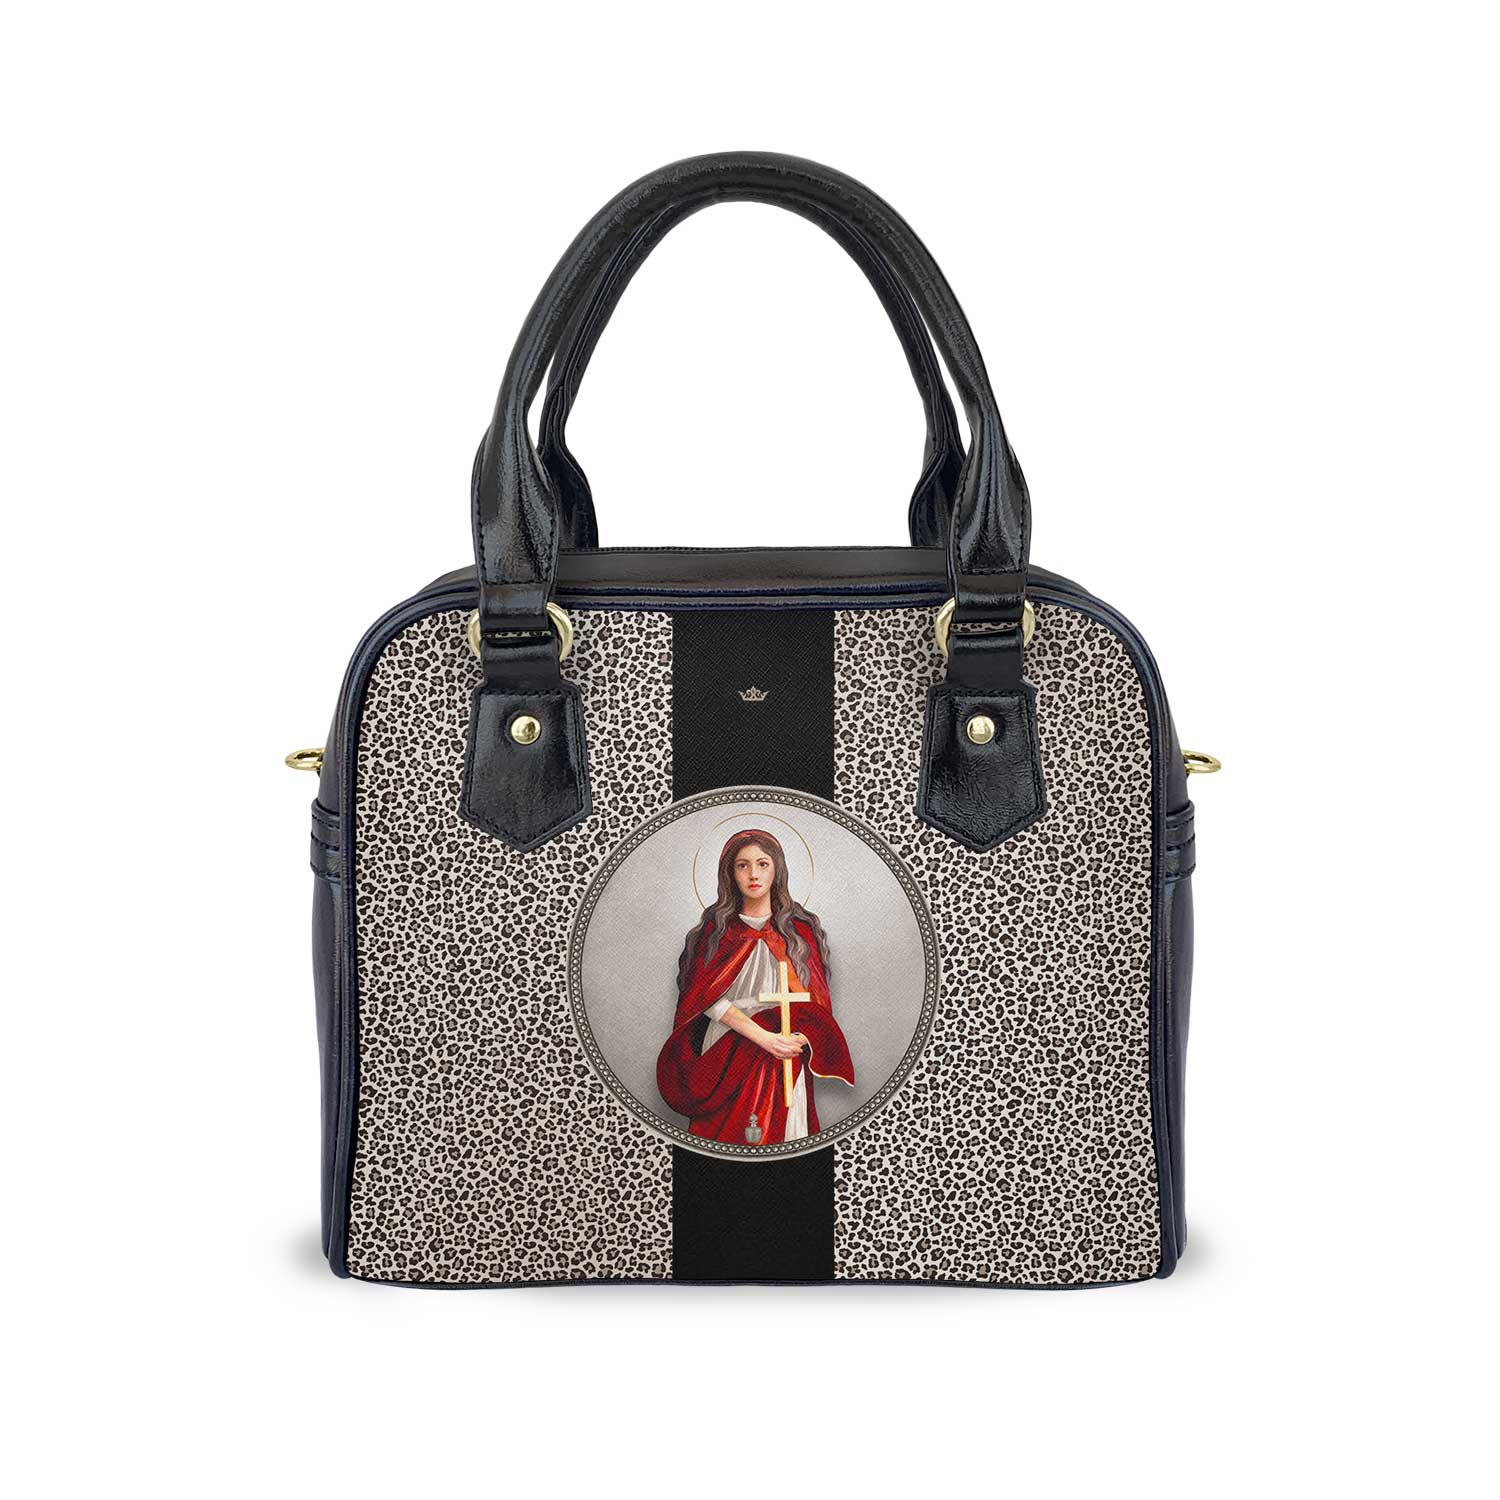 St. Mary Magdalene Medallion Handbag (Leopard)